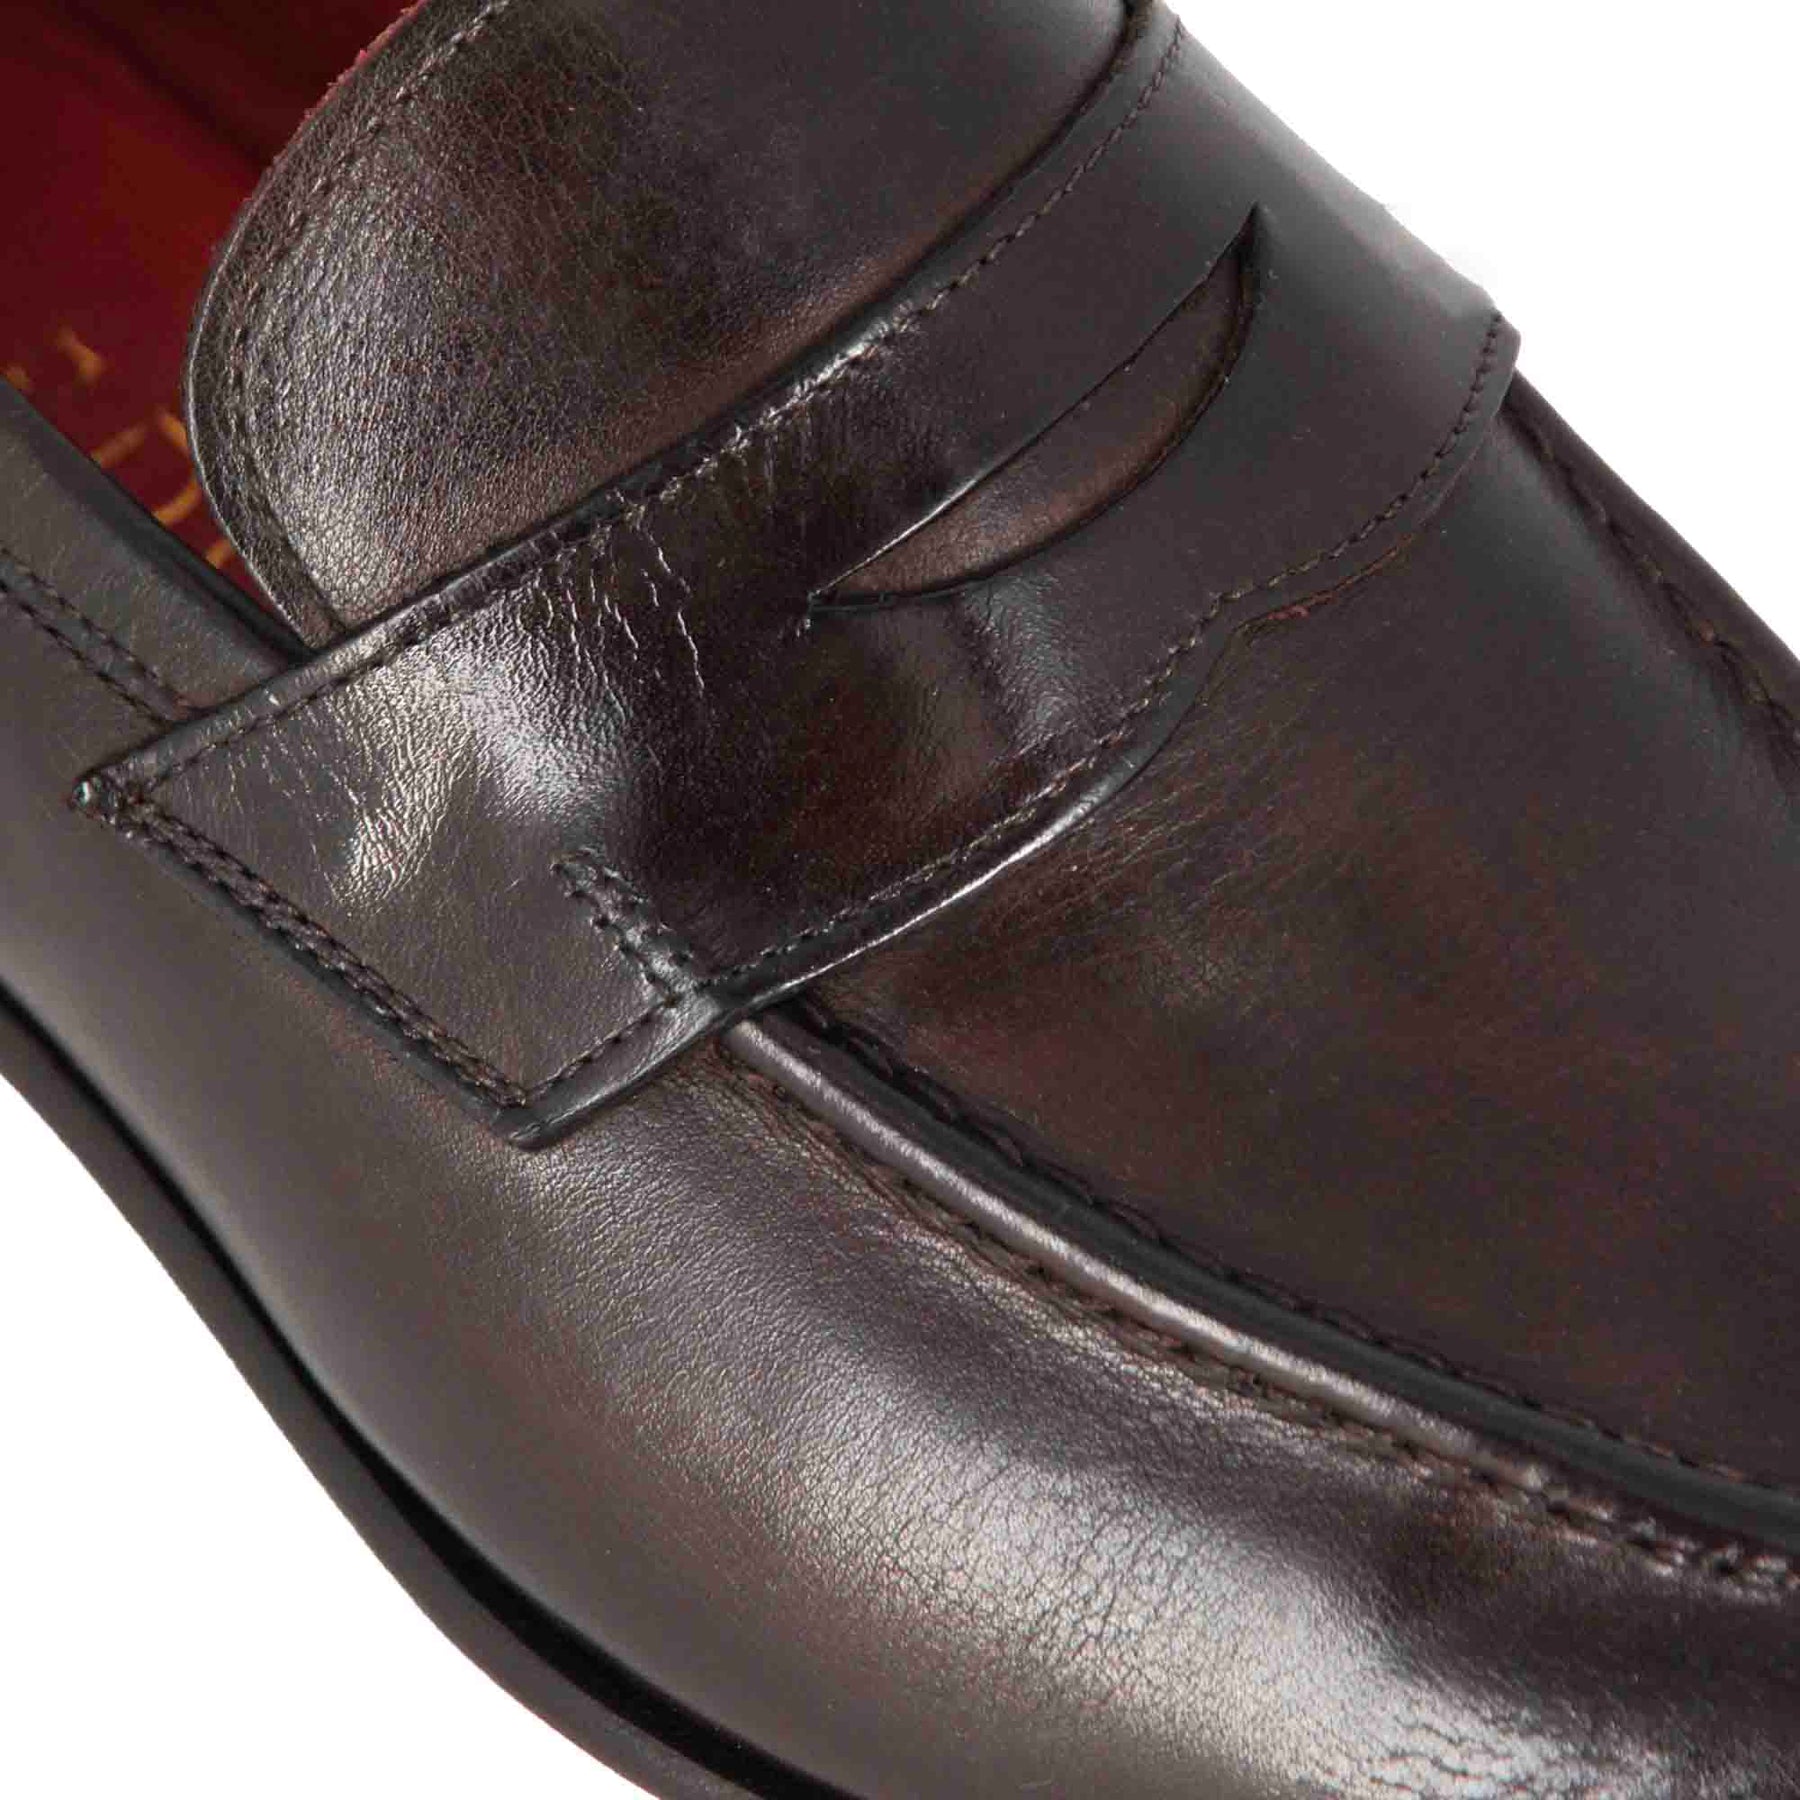 Classic men's moccasin in dark brown leather